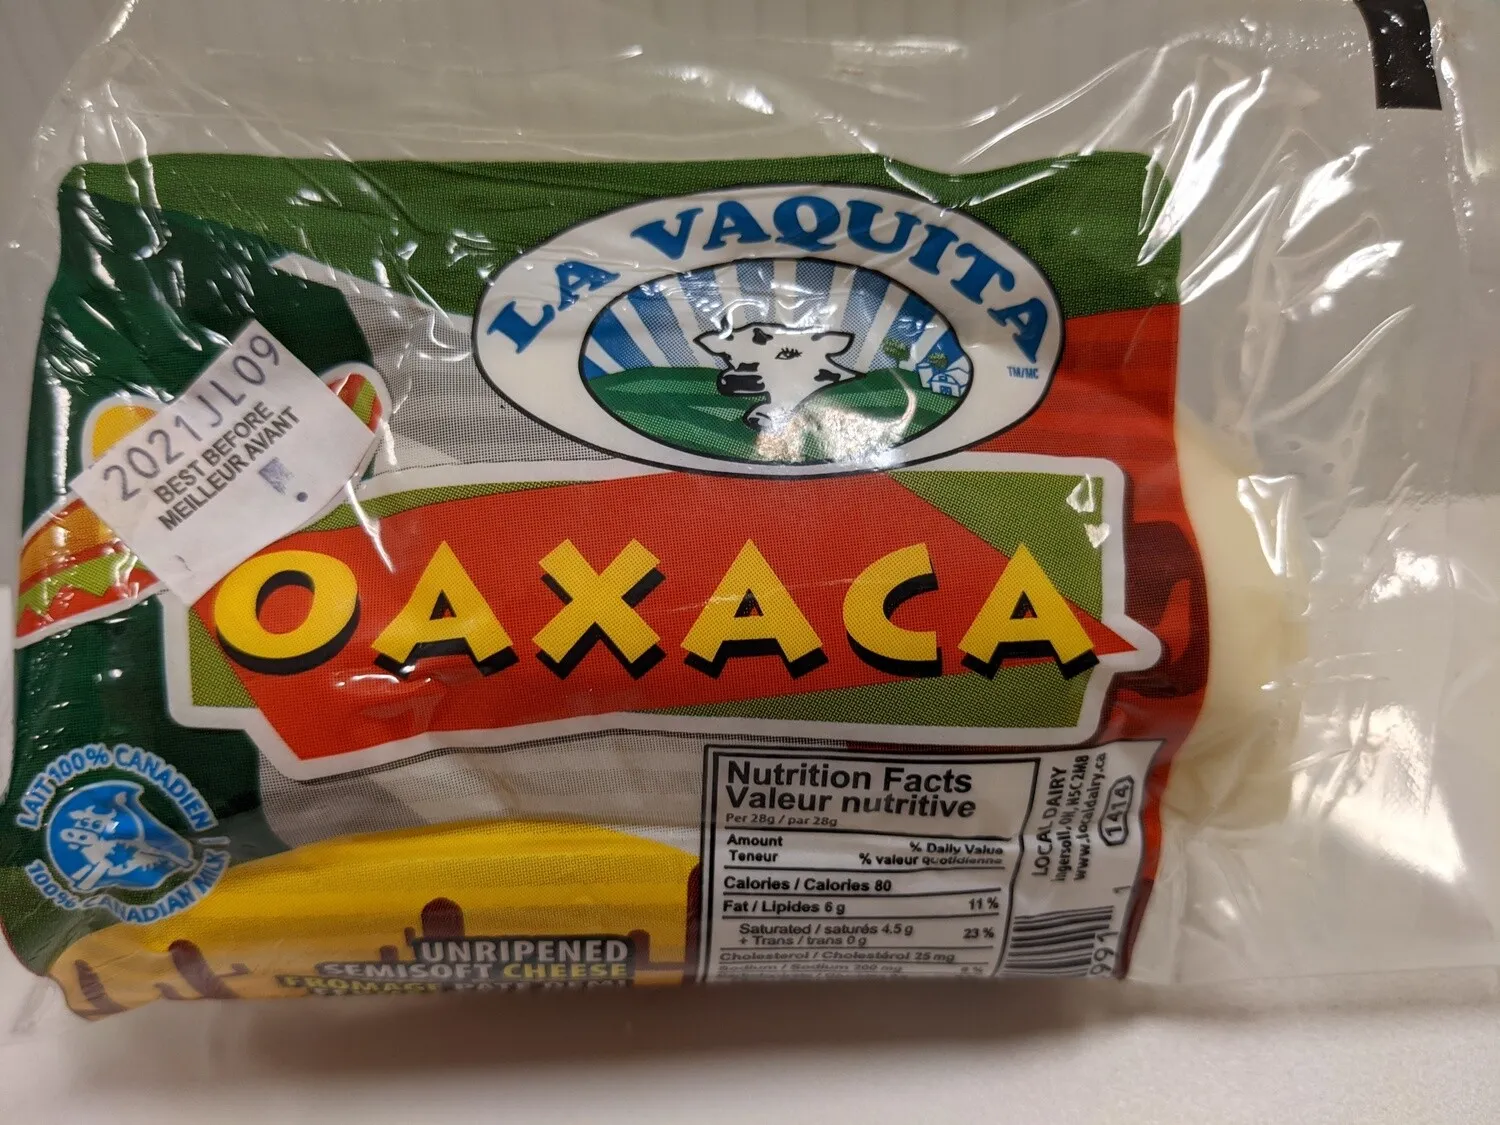 Oaxaca cheese - La vaquita